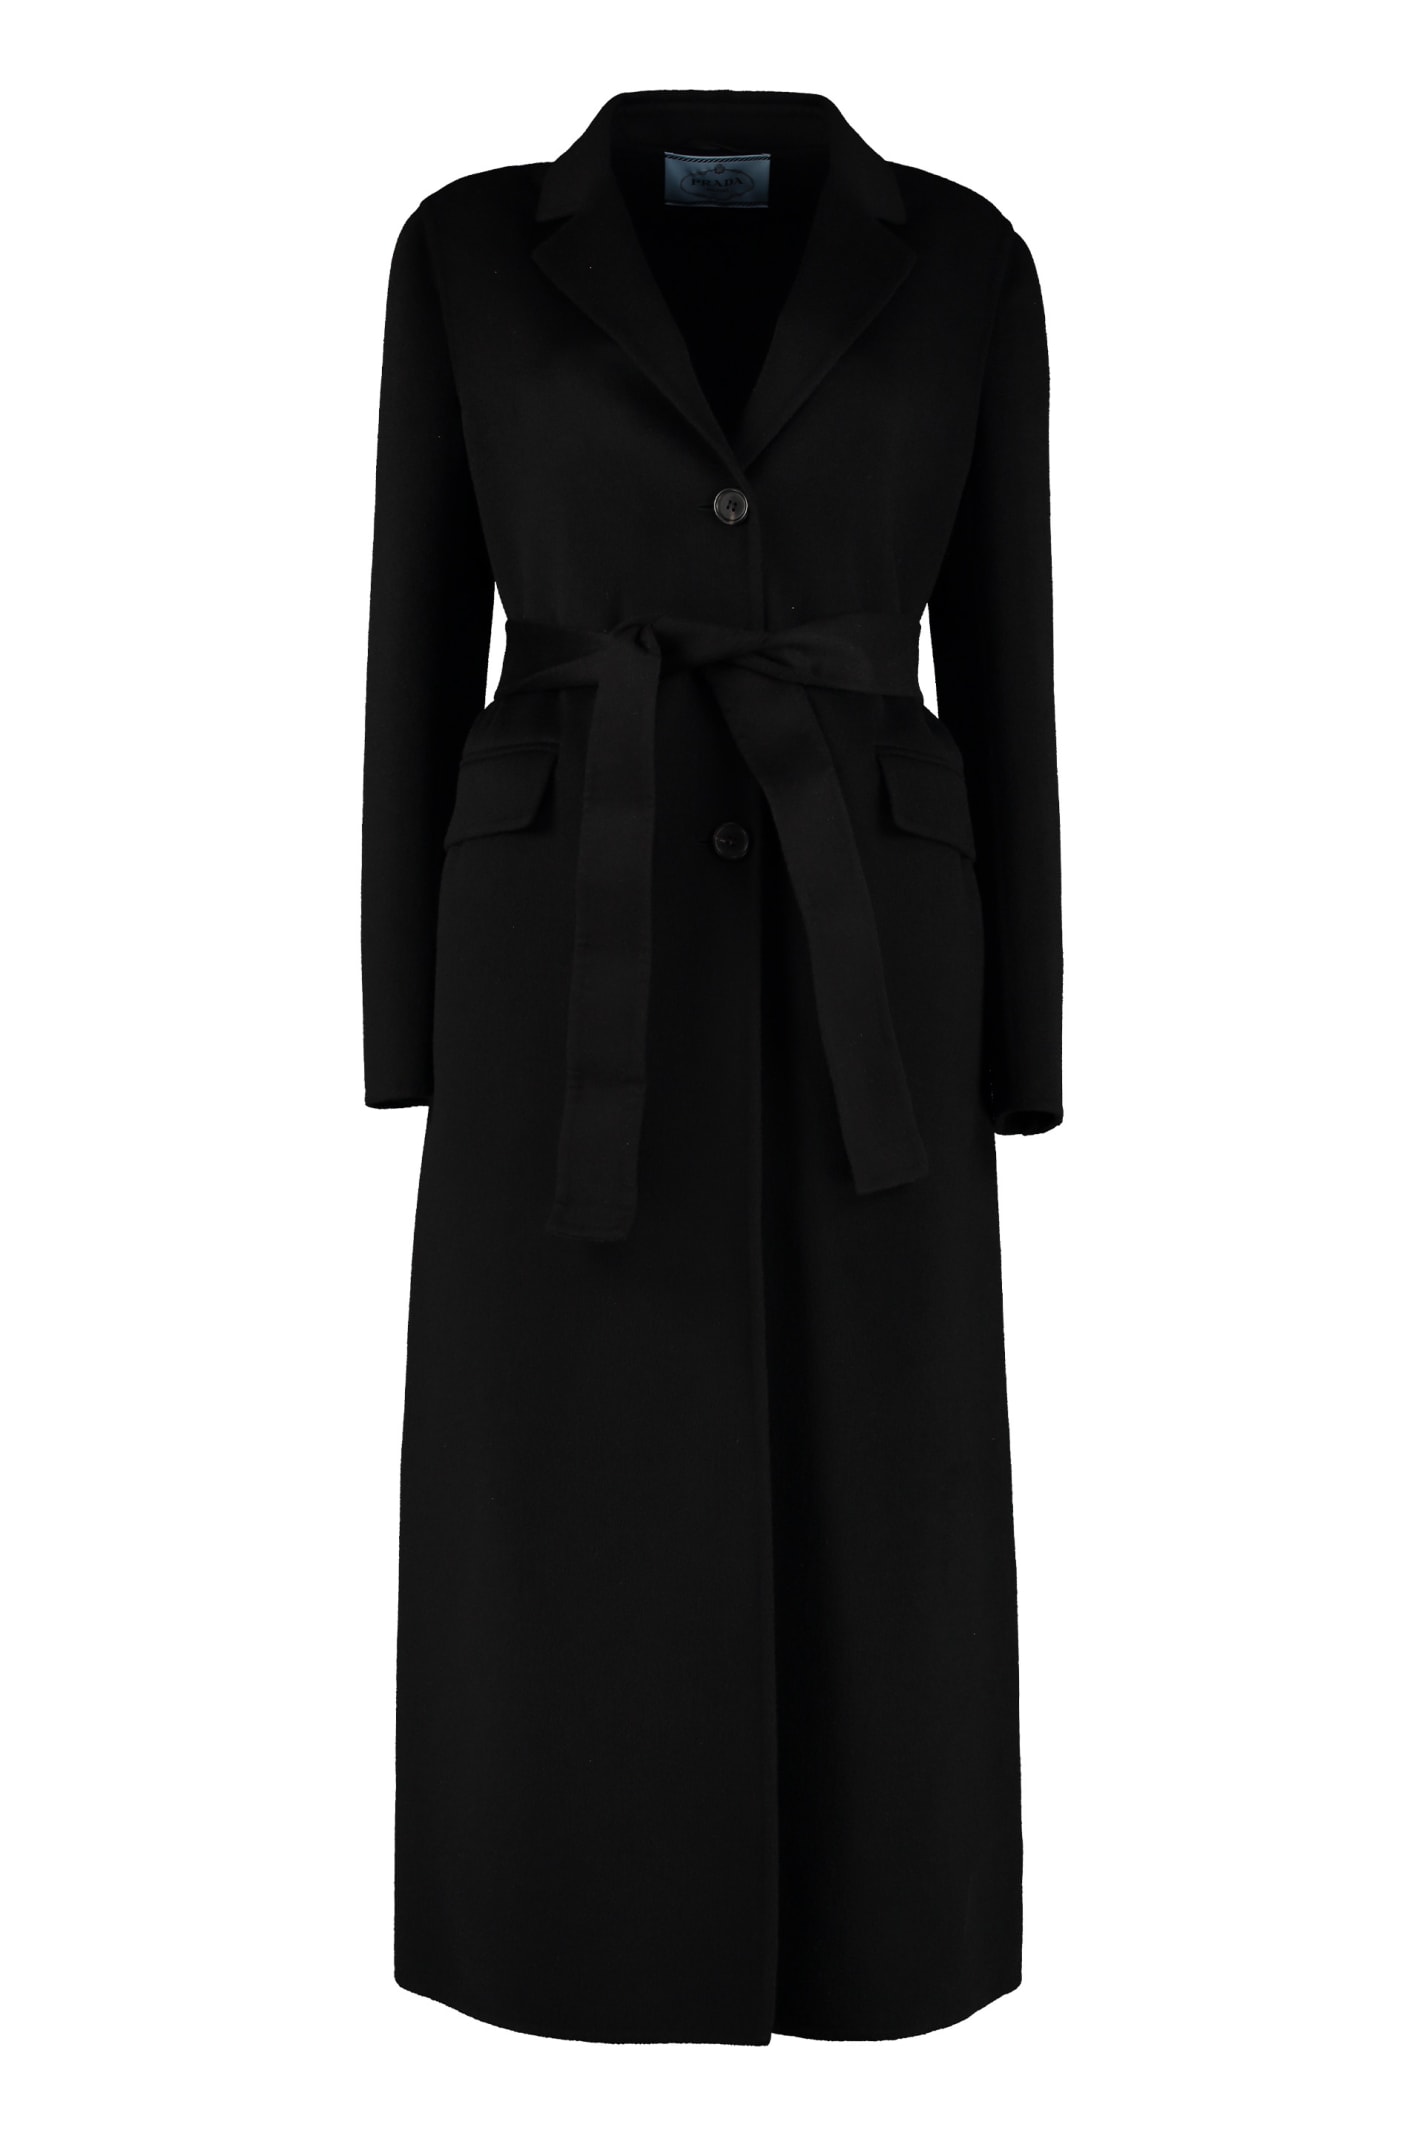 Prada Single-Breasted Long Coat In Black | ModeSens